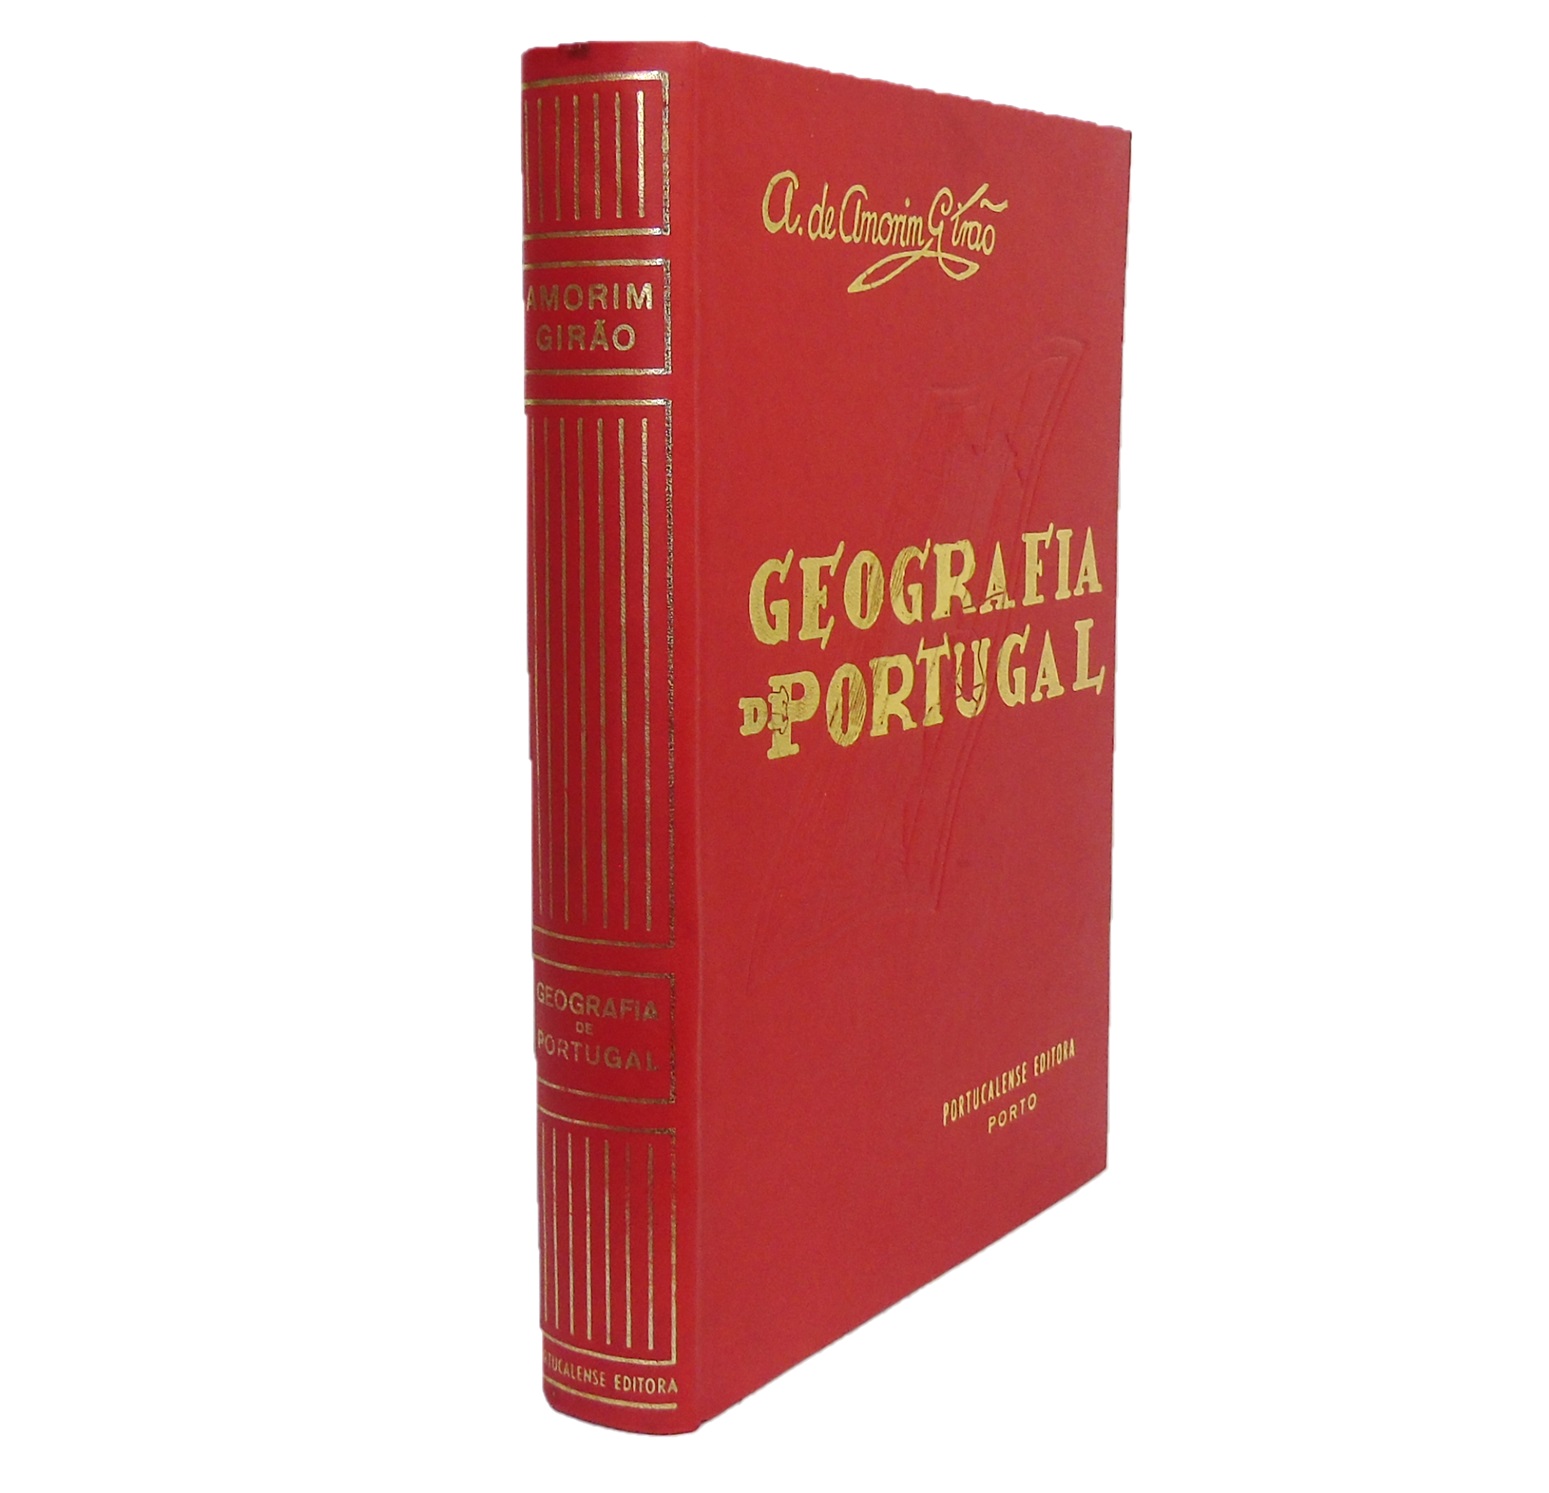  GEOGRAFIA DE PORTUGAL